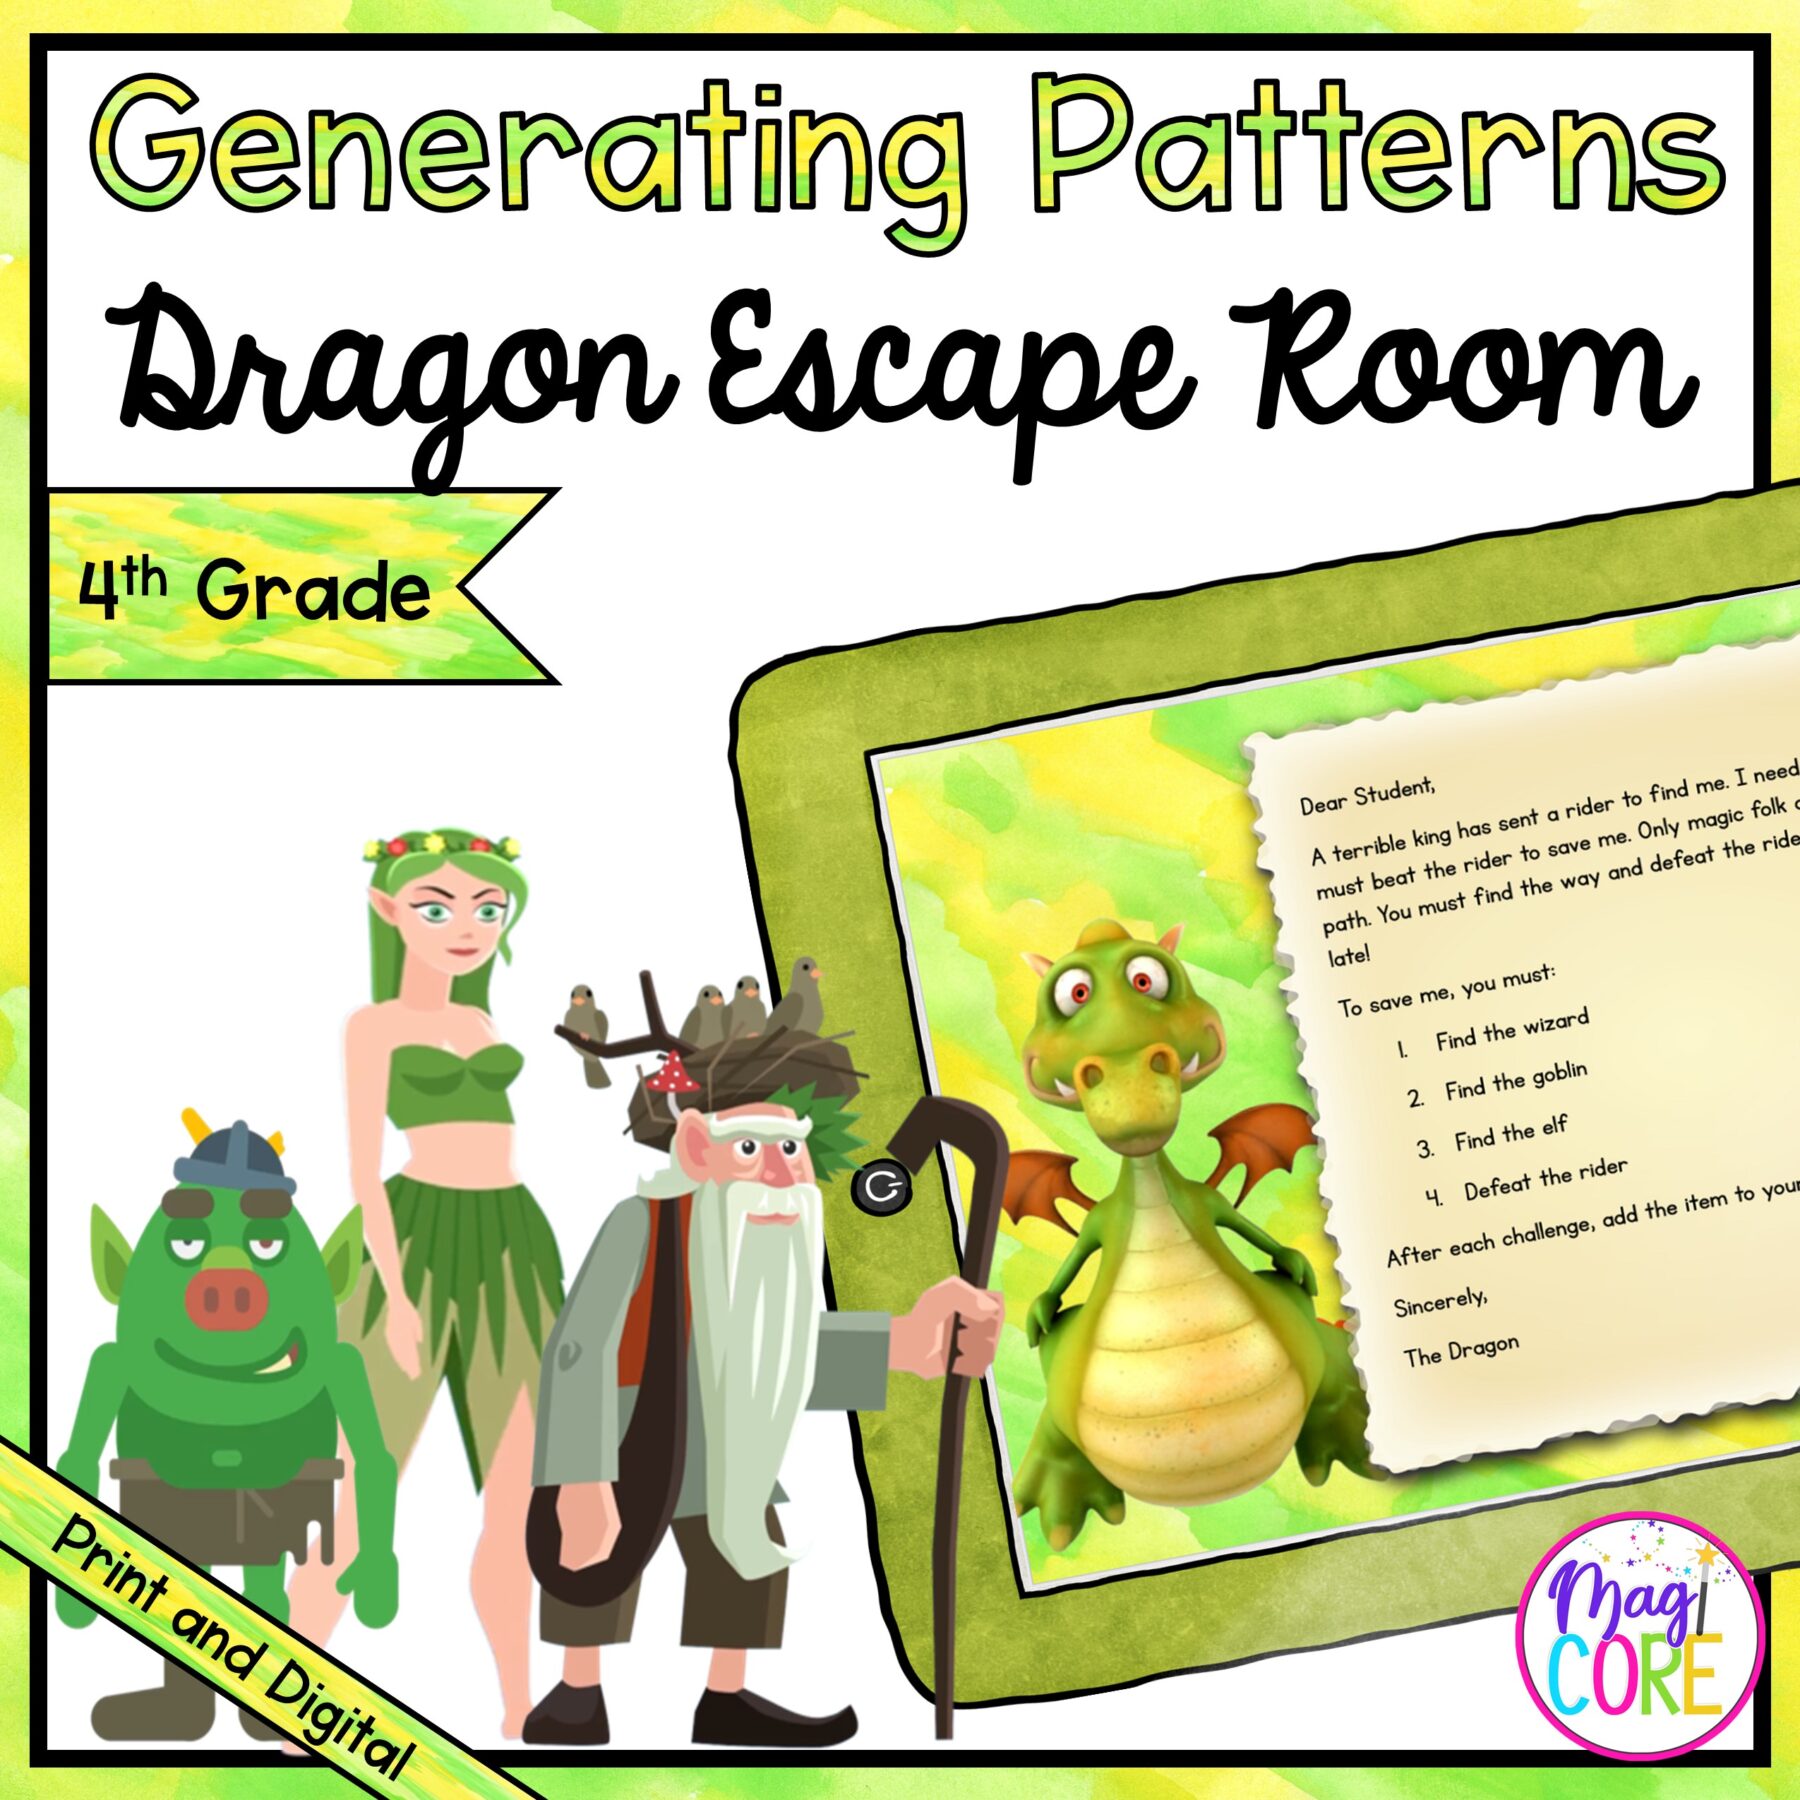 Generating Patterns 4th Grade Dragon Escape Room - Digital & Print